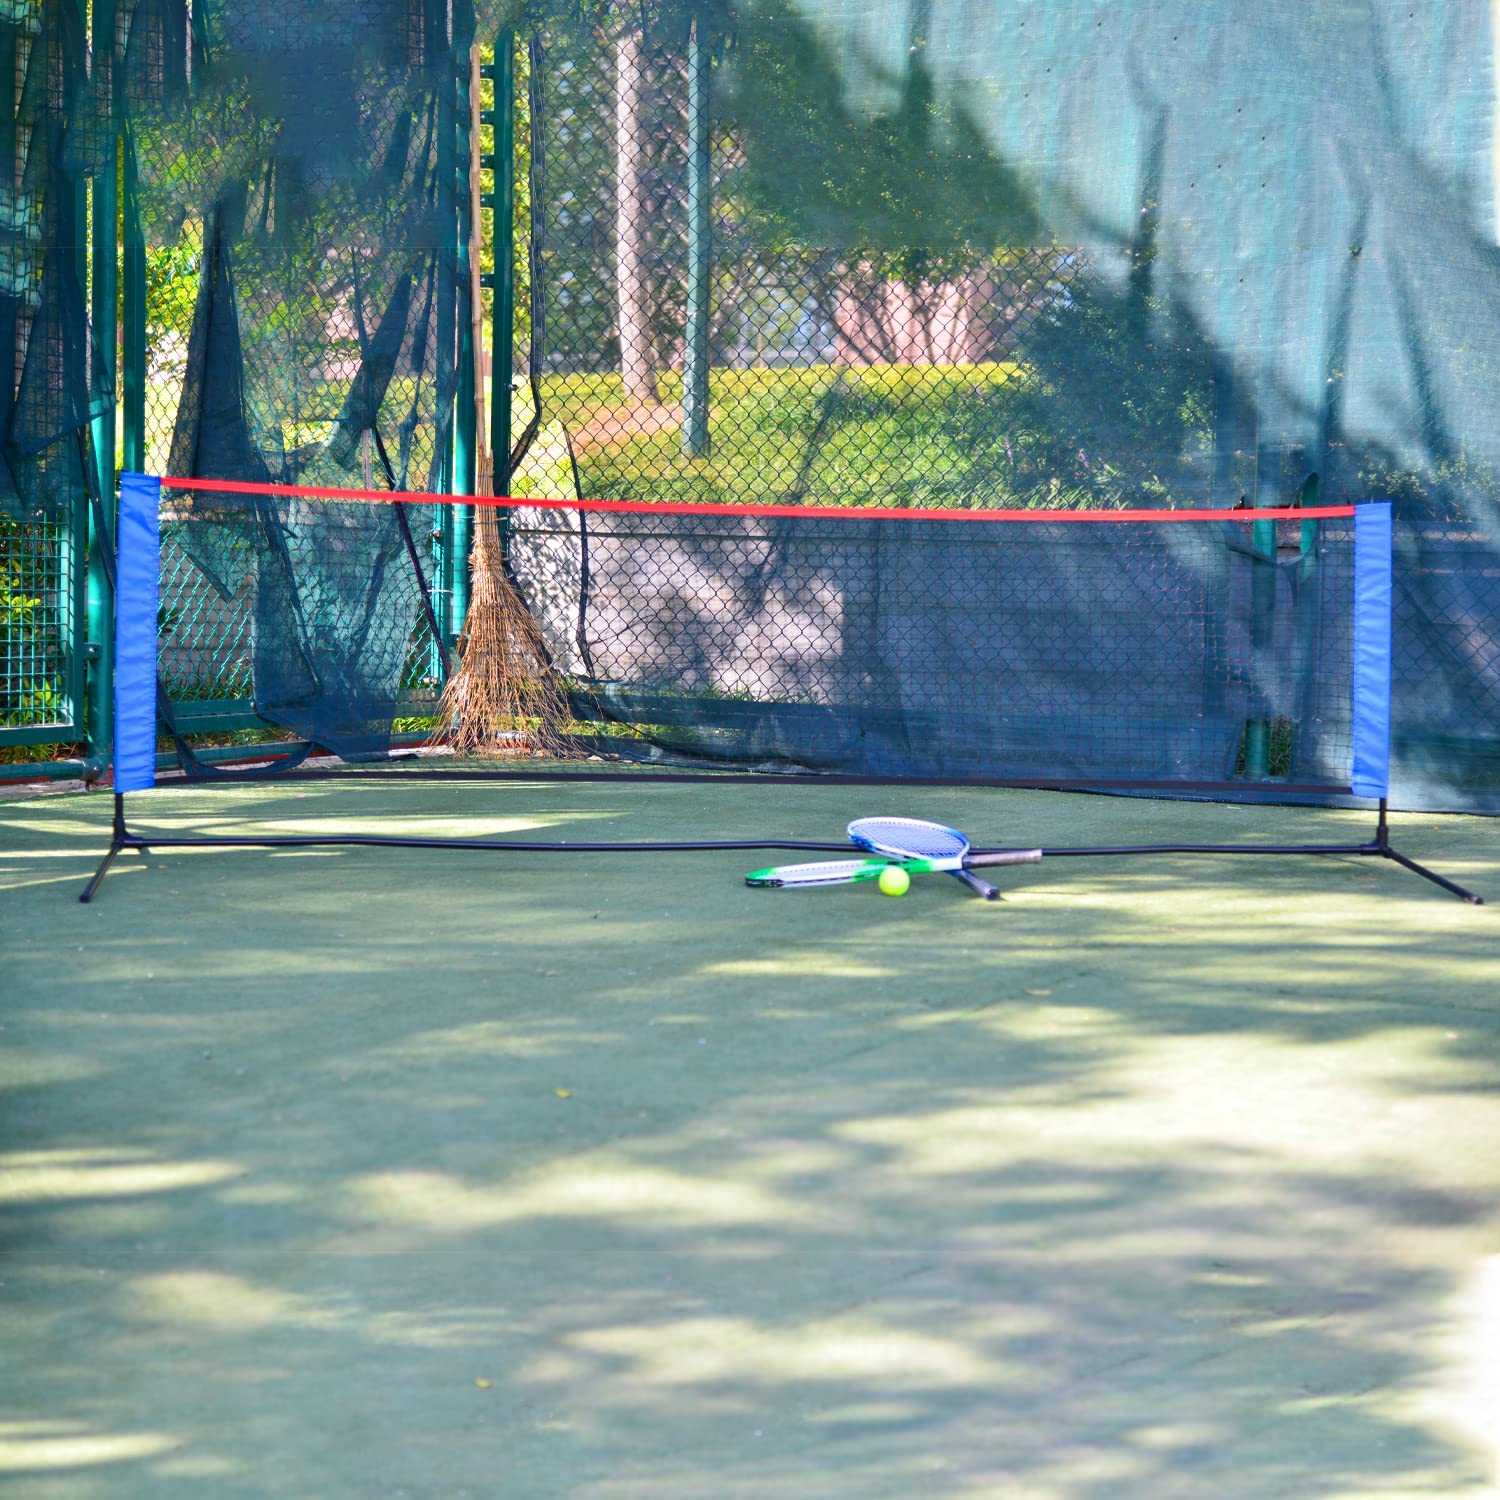 Children's tennis net, badminton net, tennis net for adults, includes 2 badminton and 2 tennis balls.